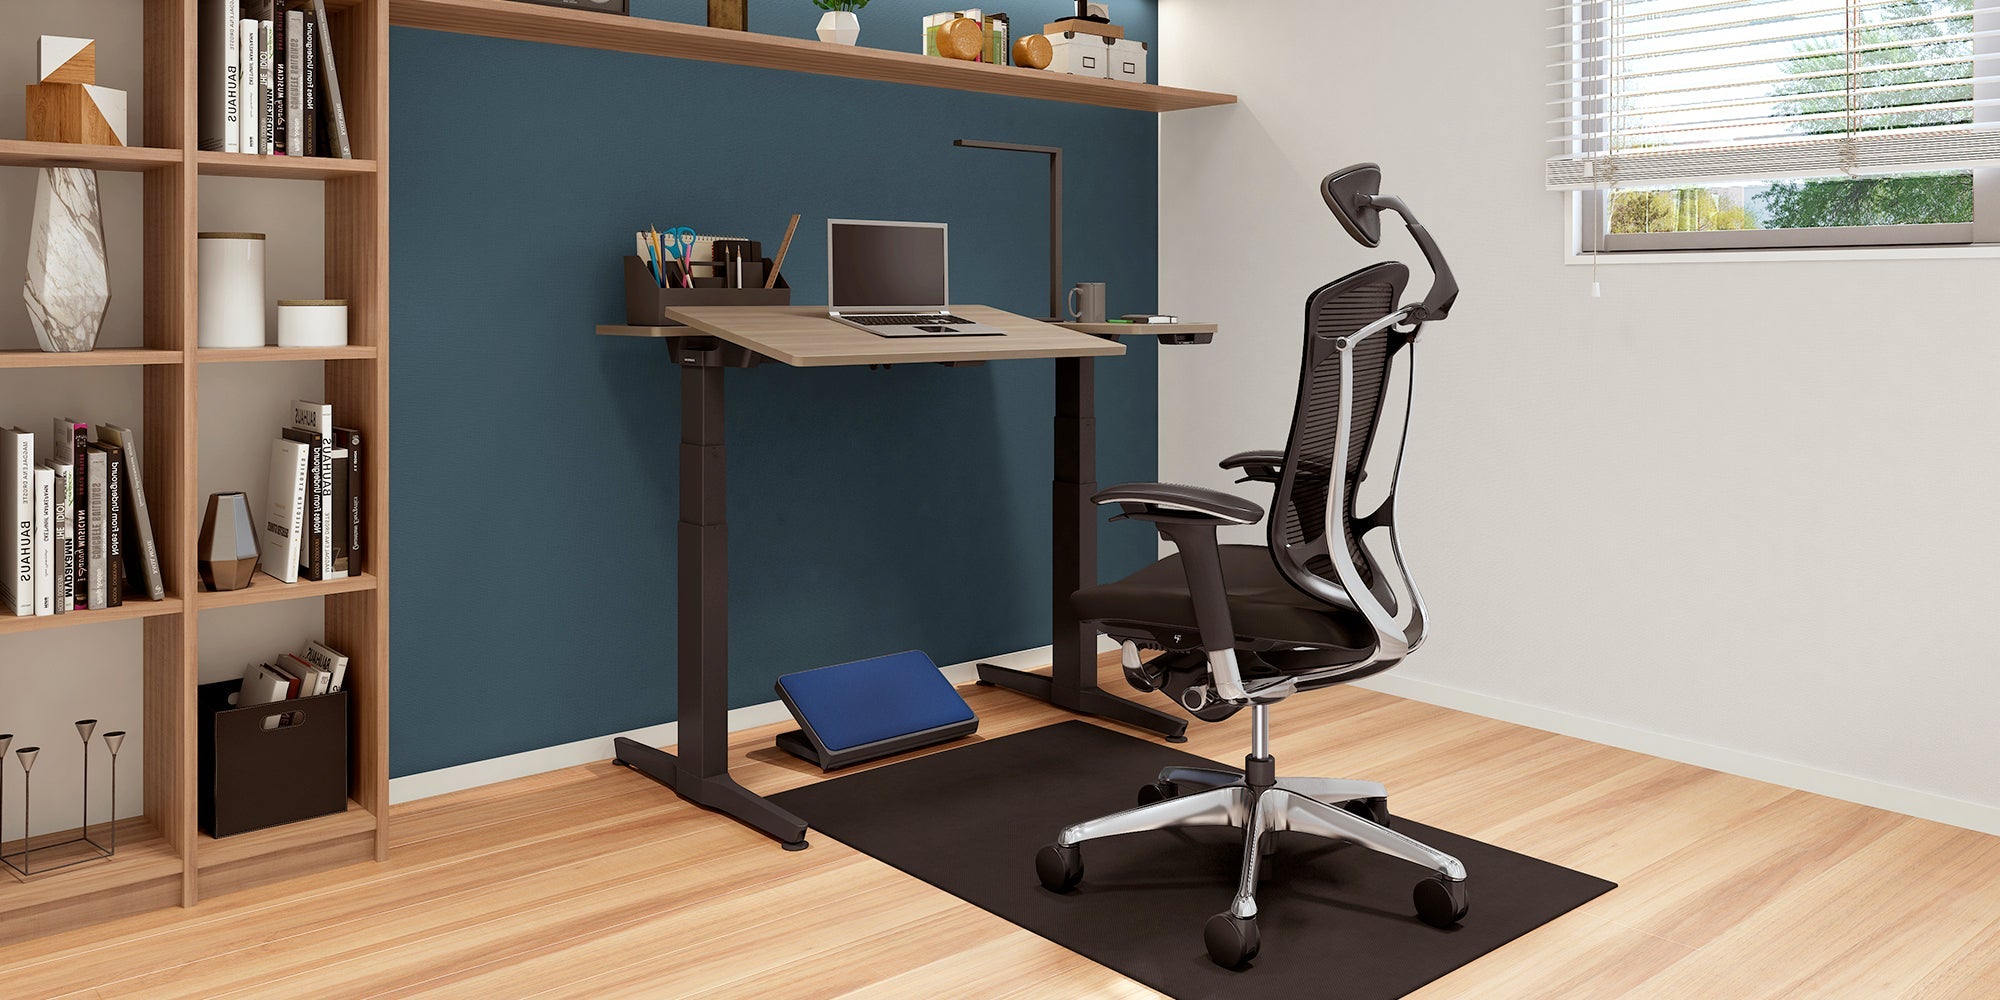 Modern Computer Chair - A modern computer chair with a simple and modern design.